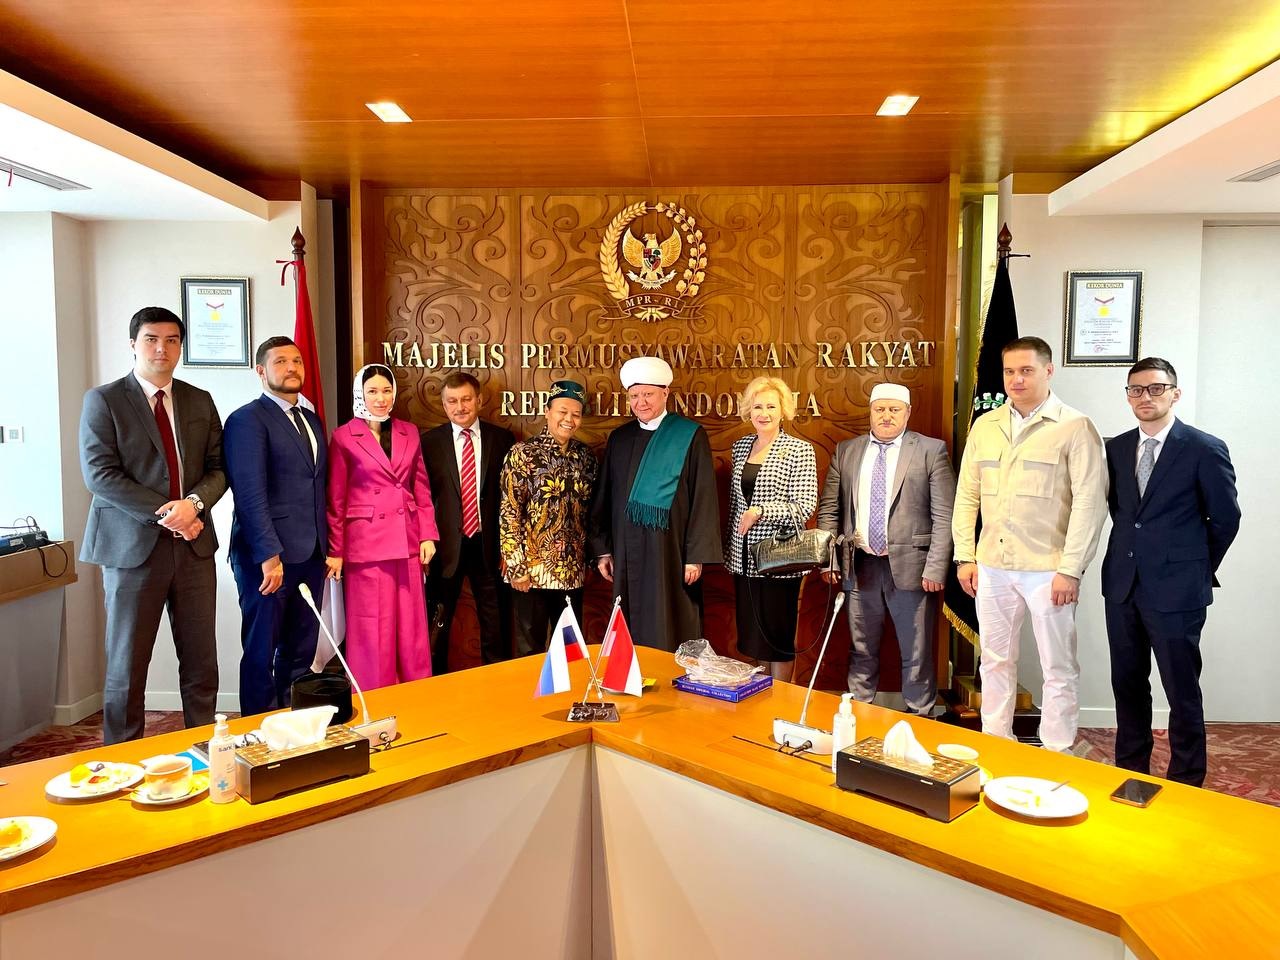 Муфтий ДСМР Крганов налаживает связи с мусульманами Индонезии